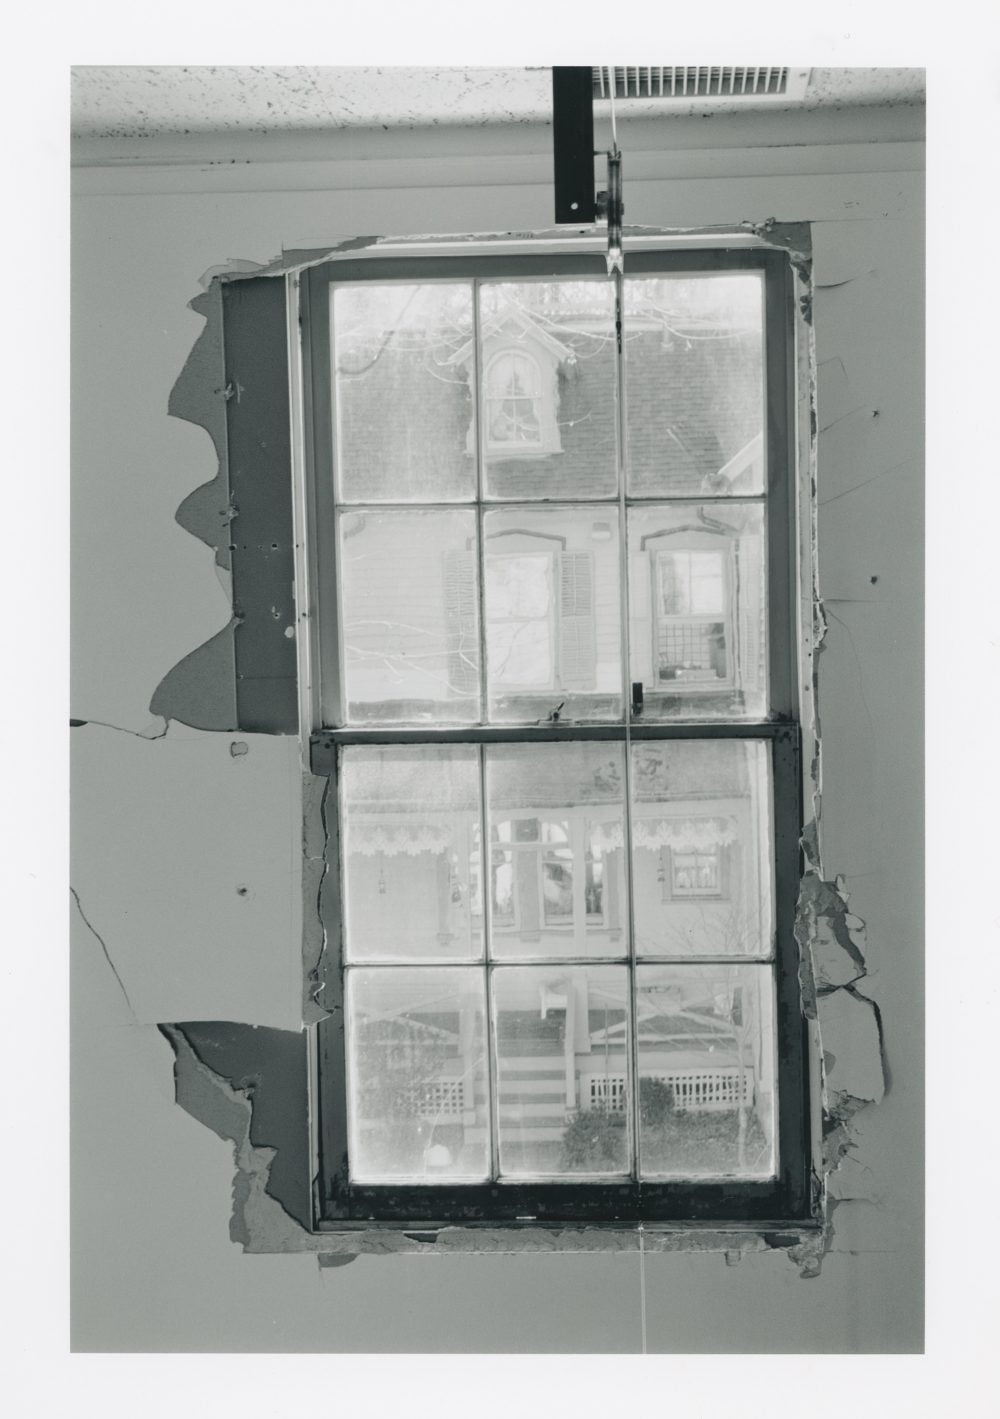 A revealed window inside The Aldrich by Ann Hamilton